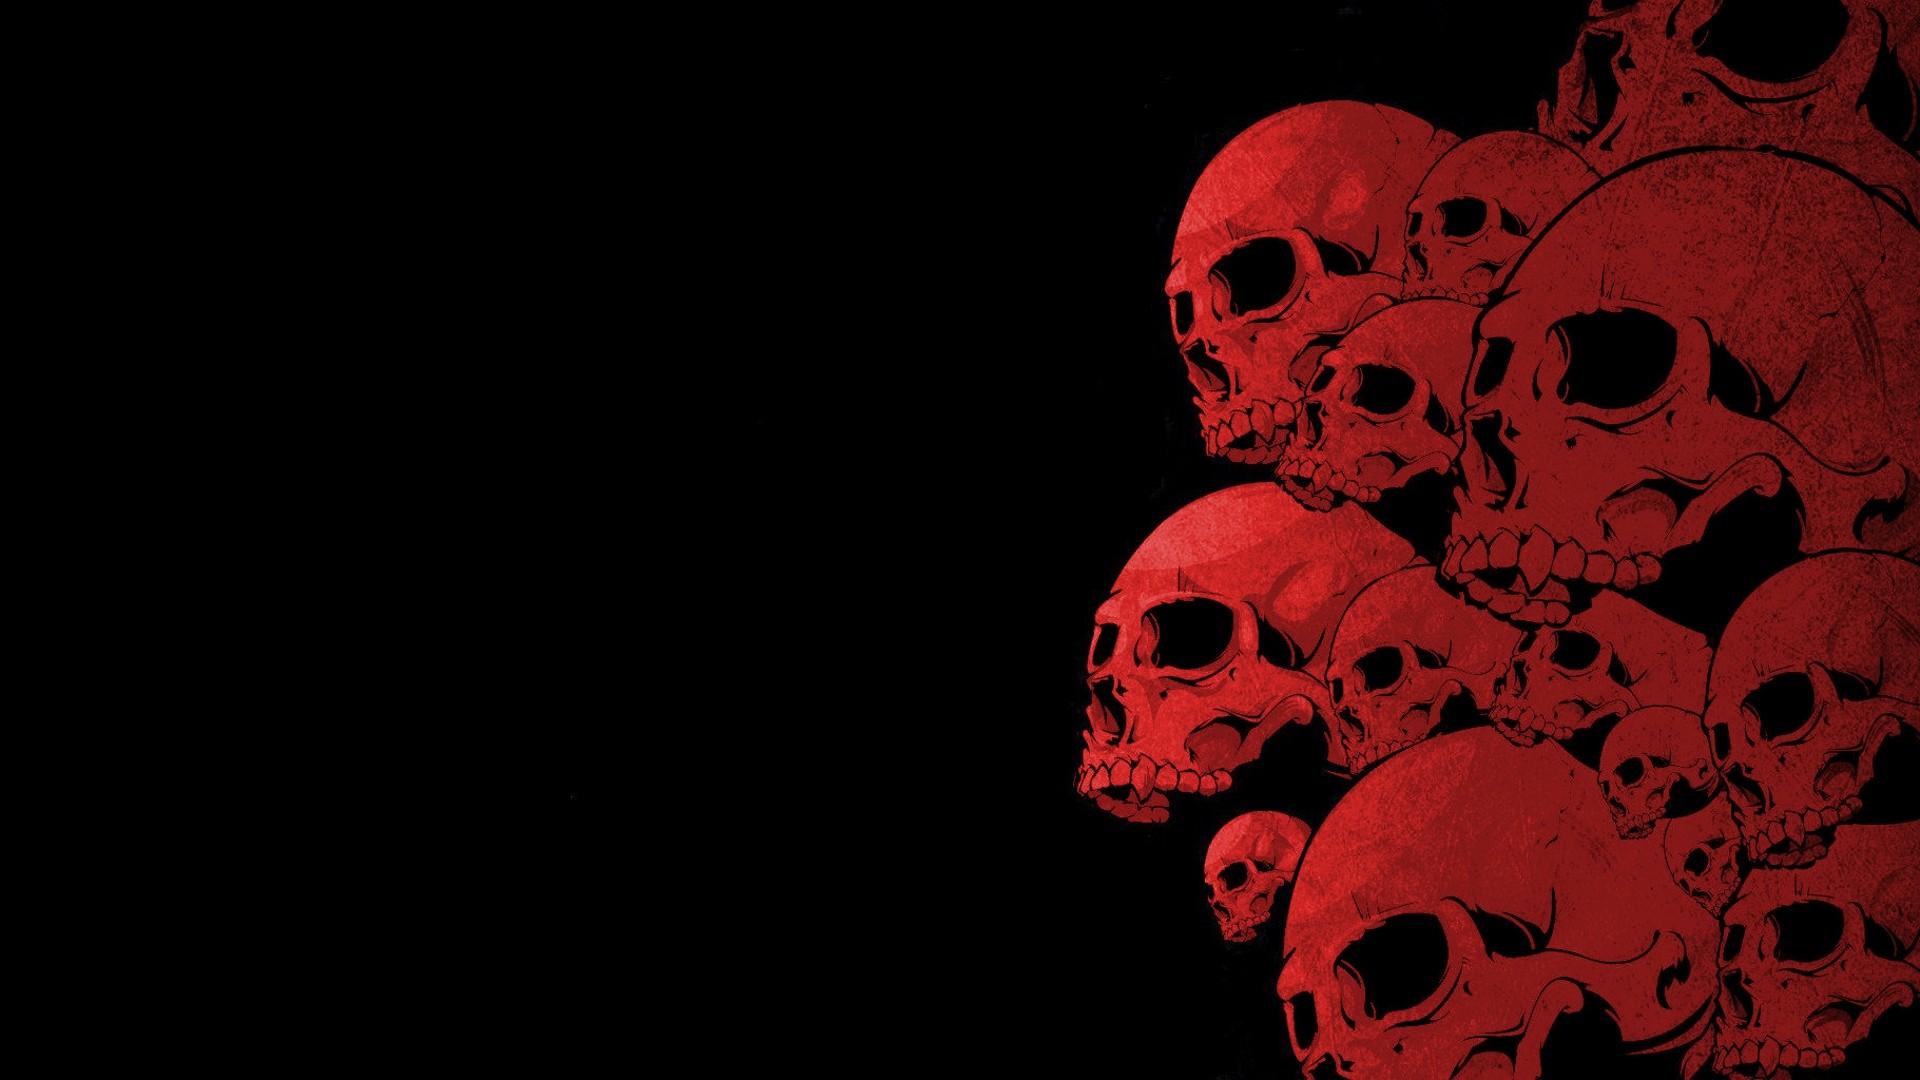 1080p Red And Black Skull Wallpaper